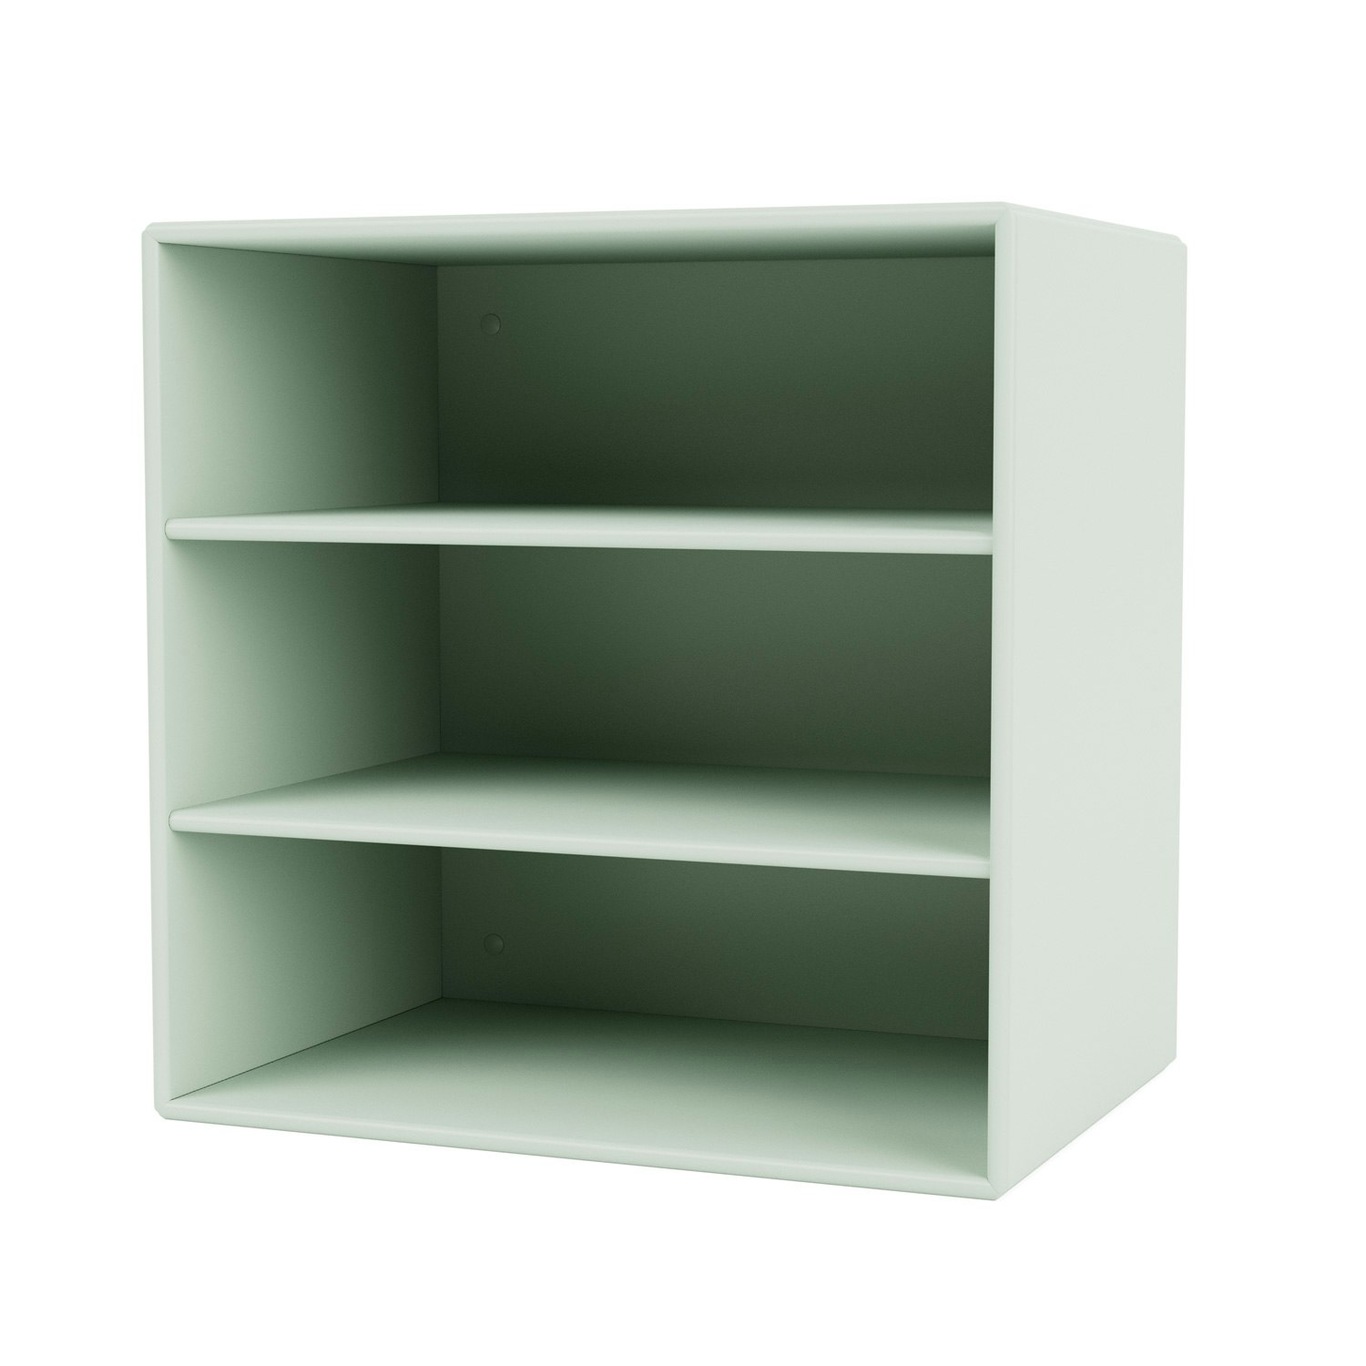 Mini 1004 Shelf With Shelves, Mist Green